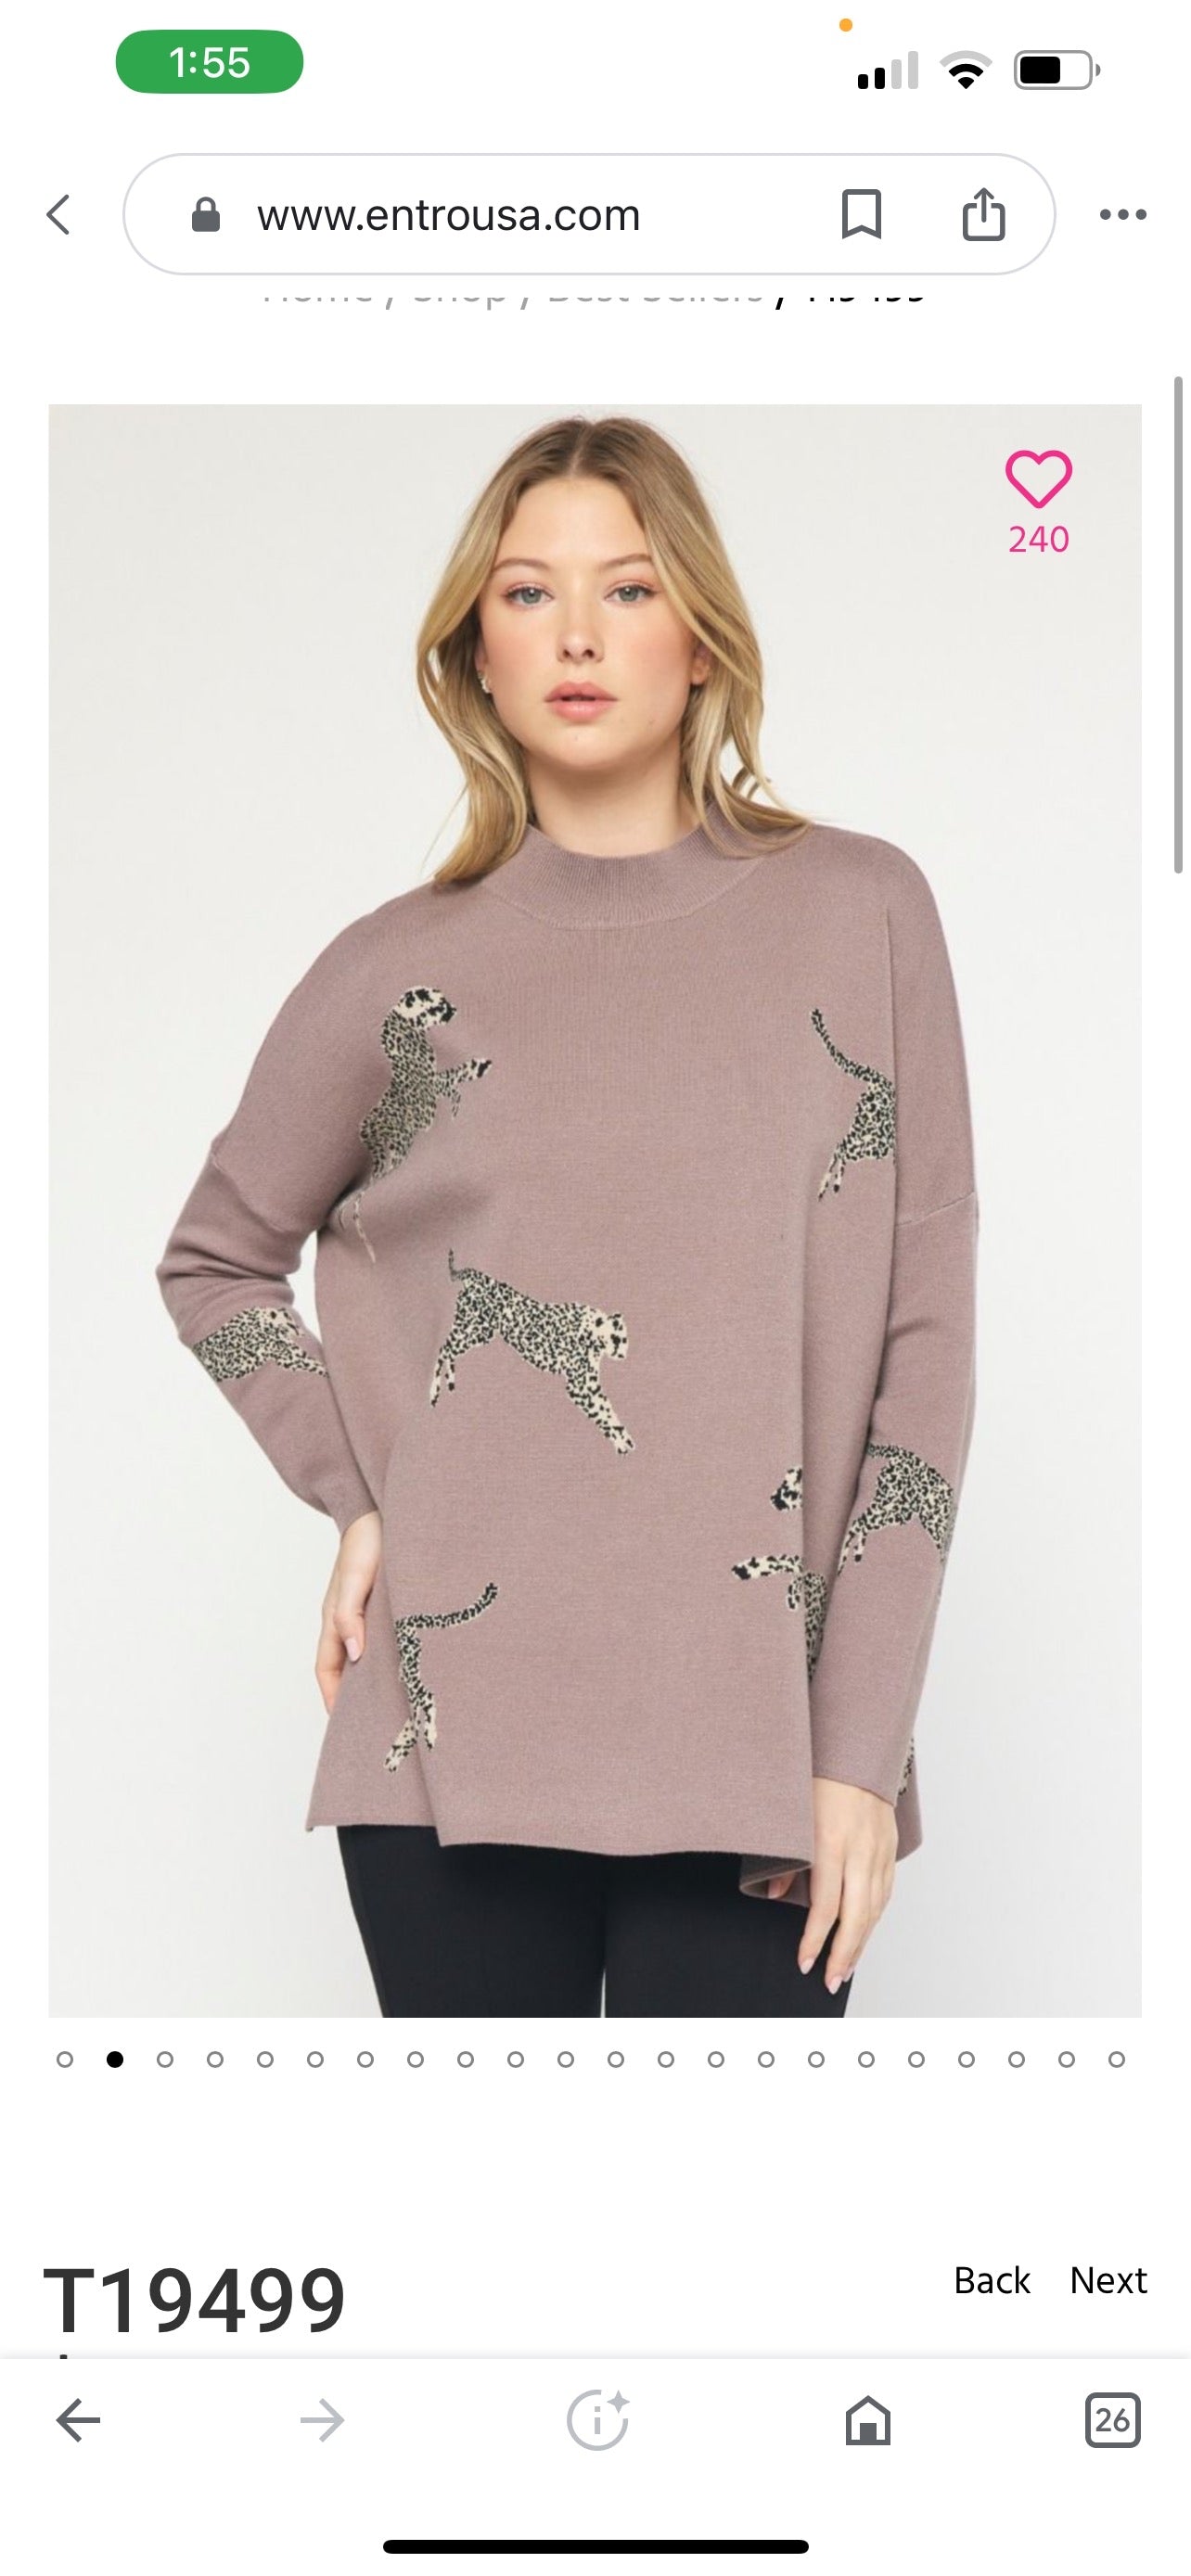 Entro cheetah sweaters